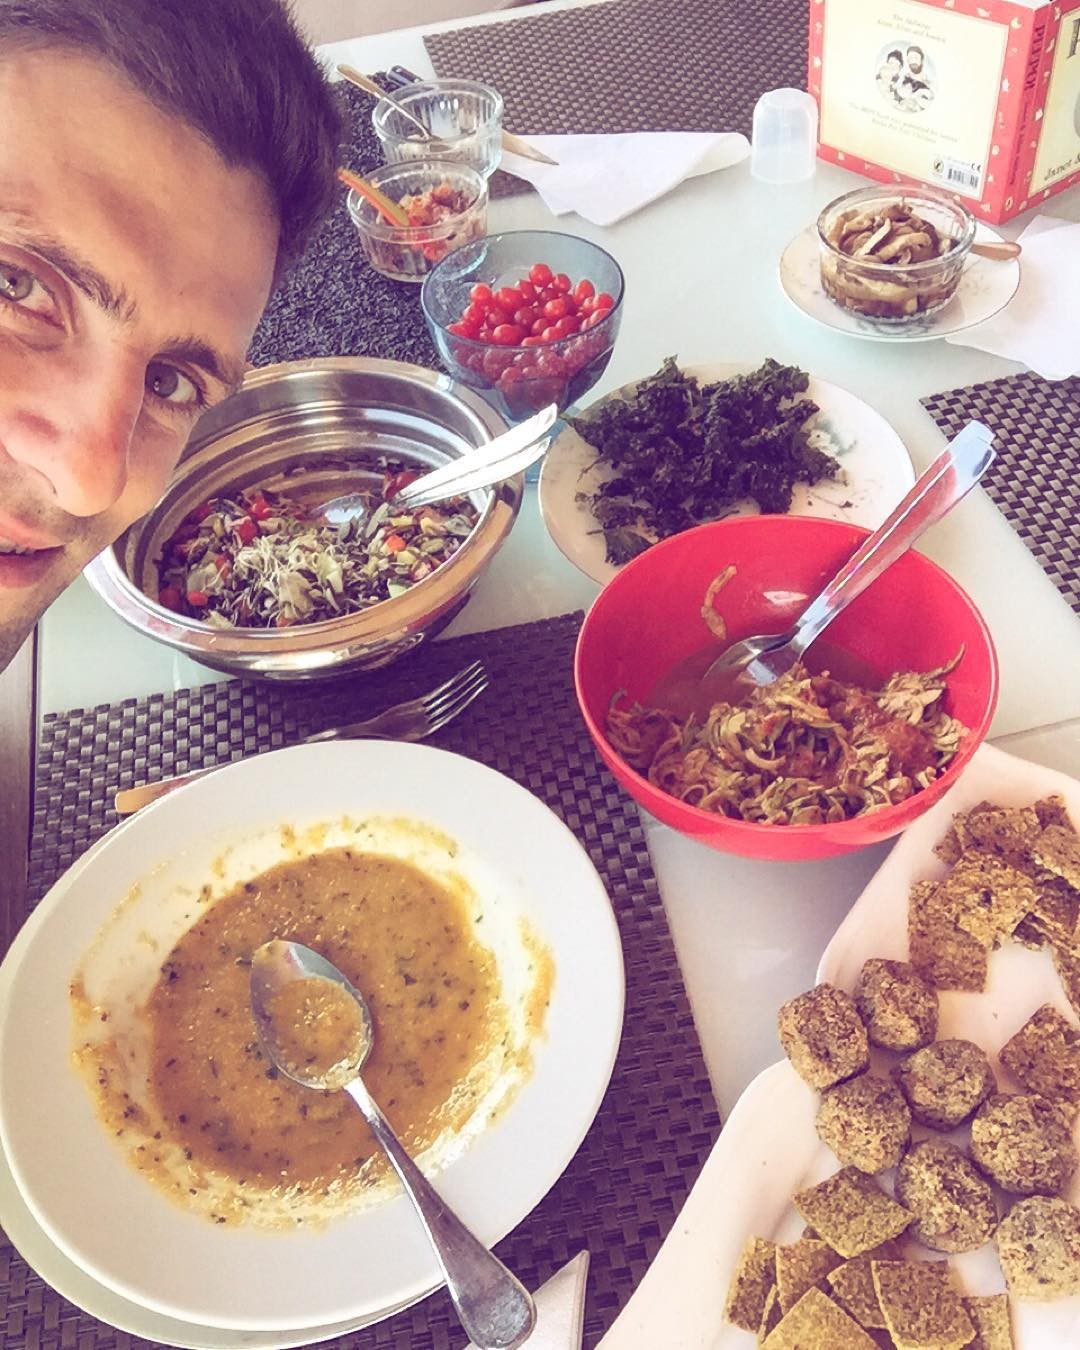 Novak's Diet